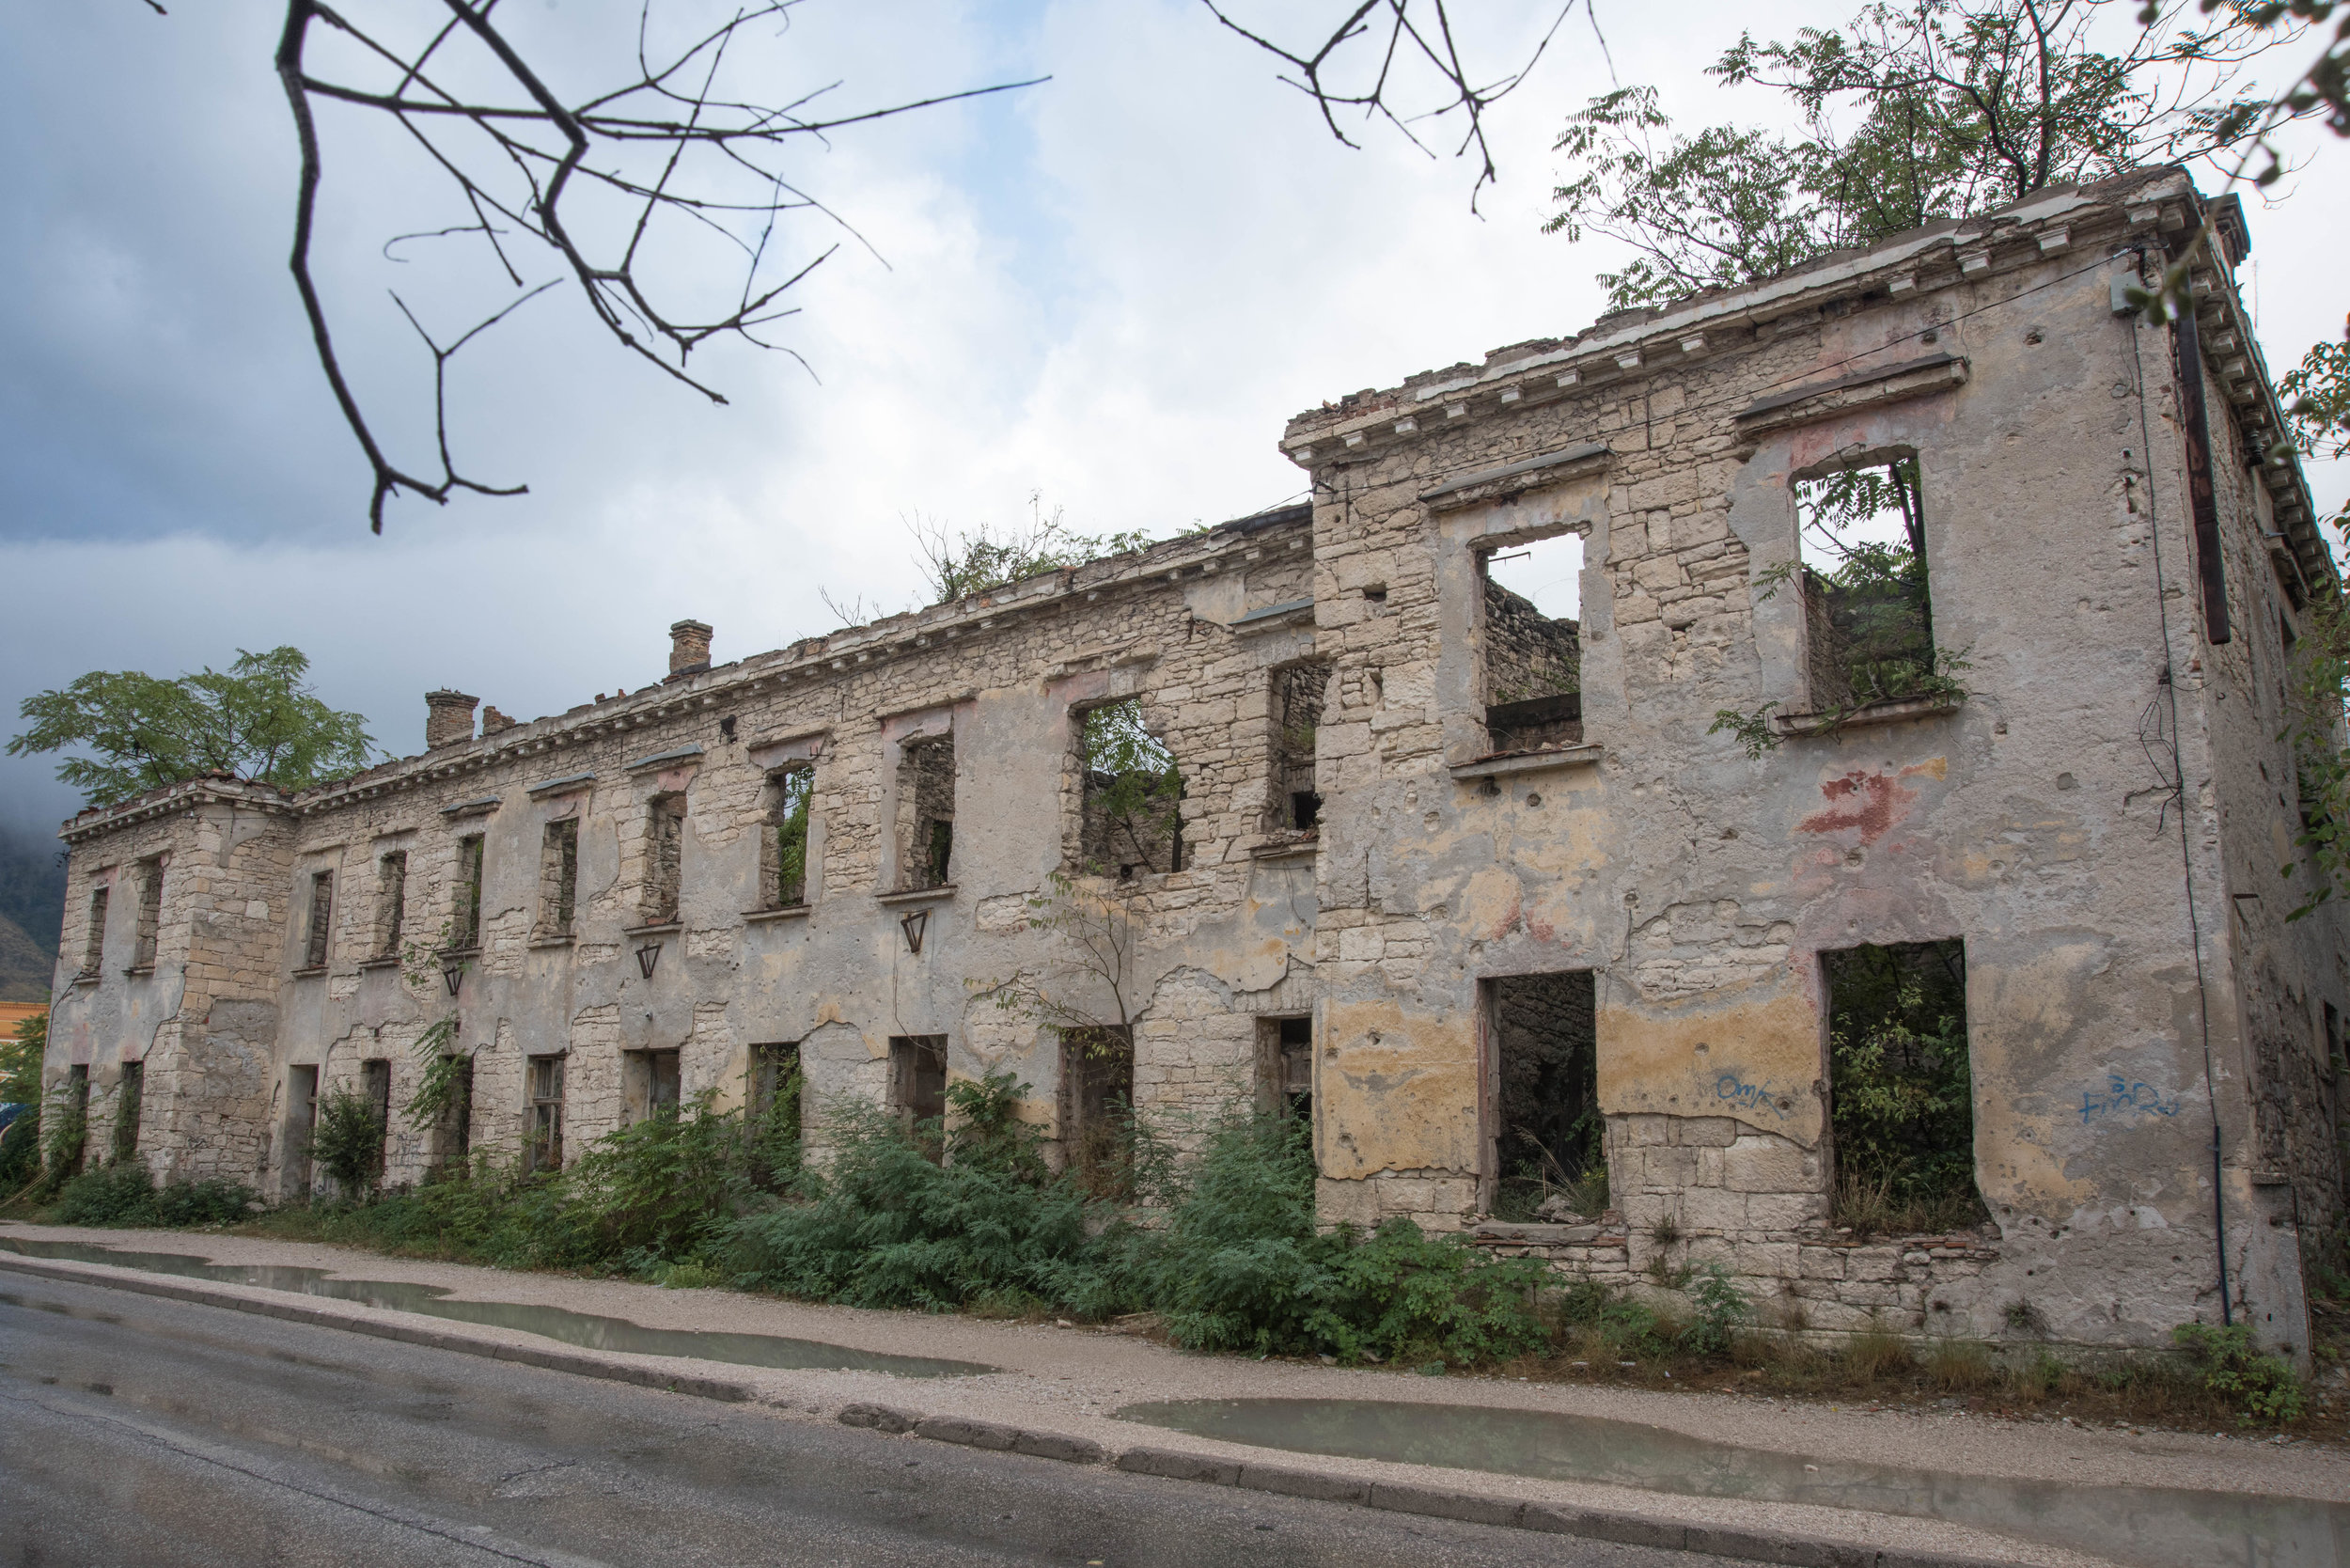 Damaged building, Mostar, Bosnia-Herzegovina